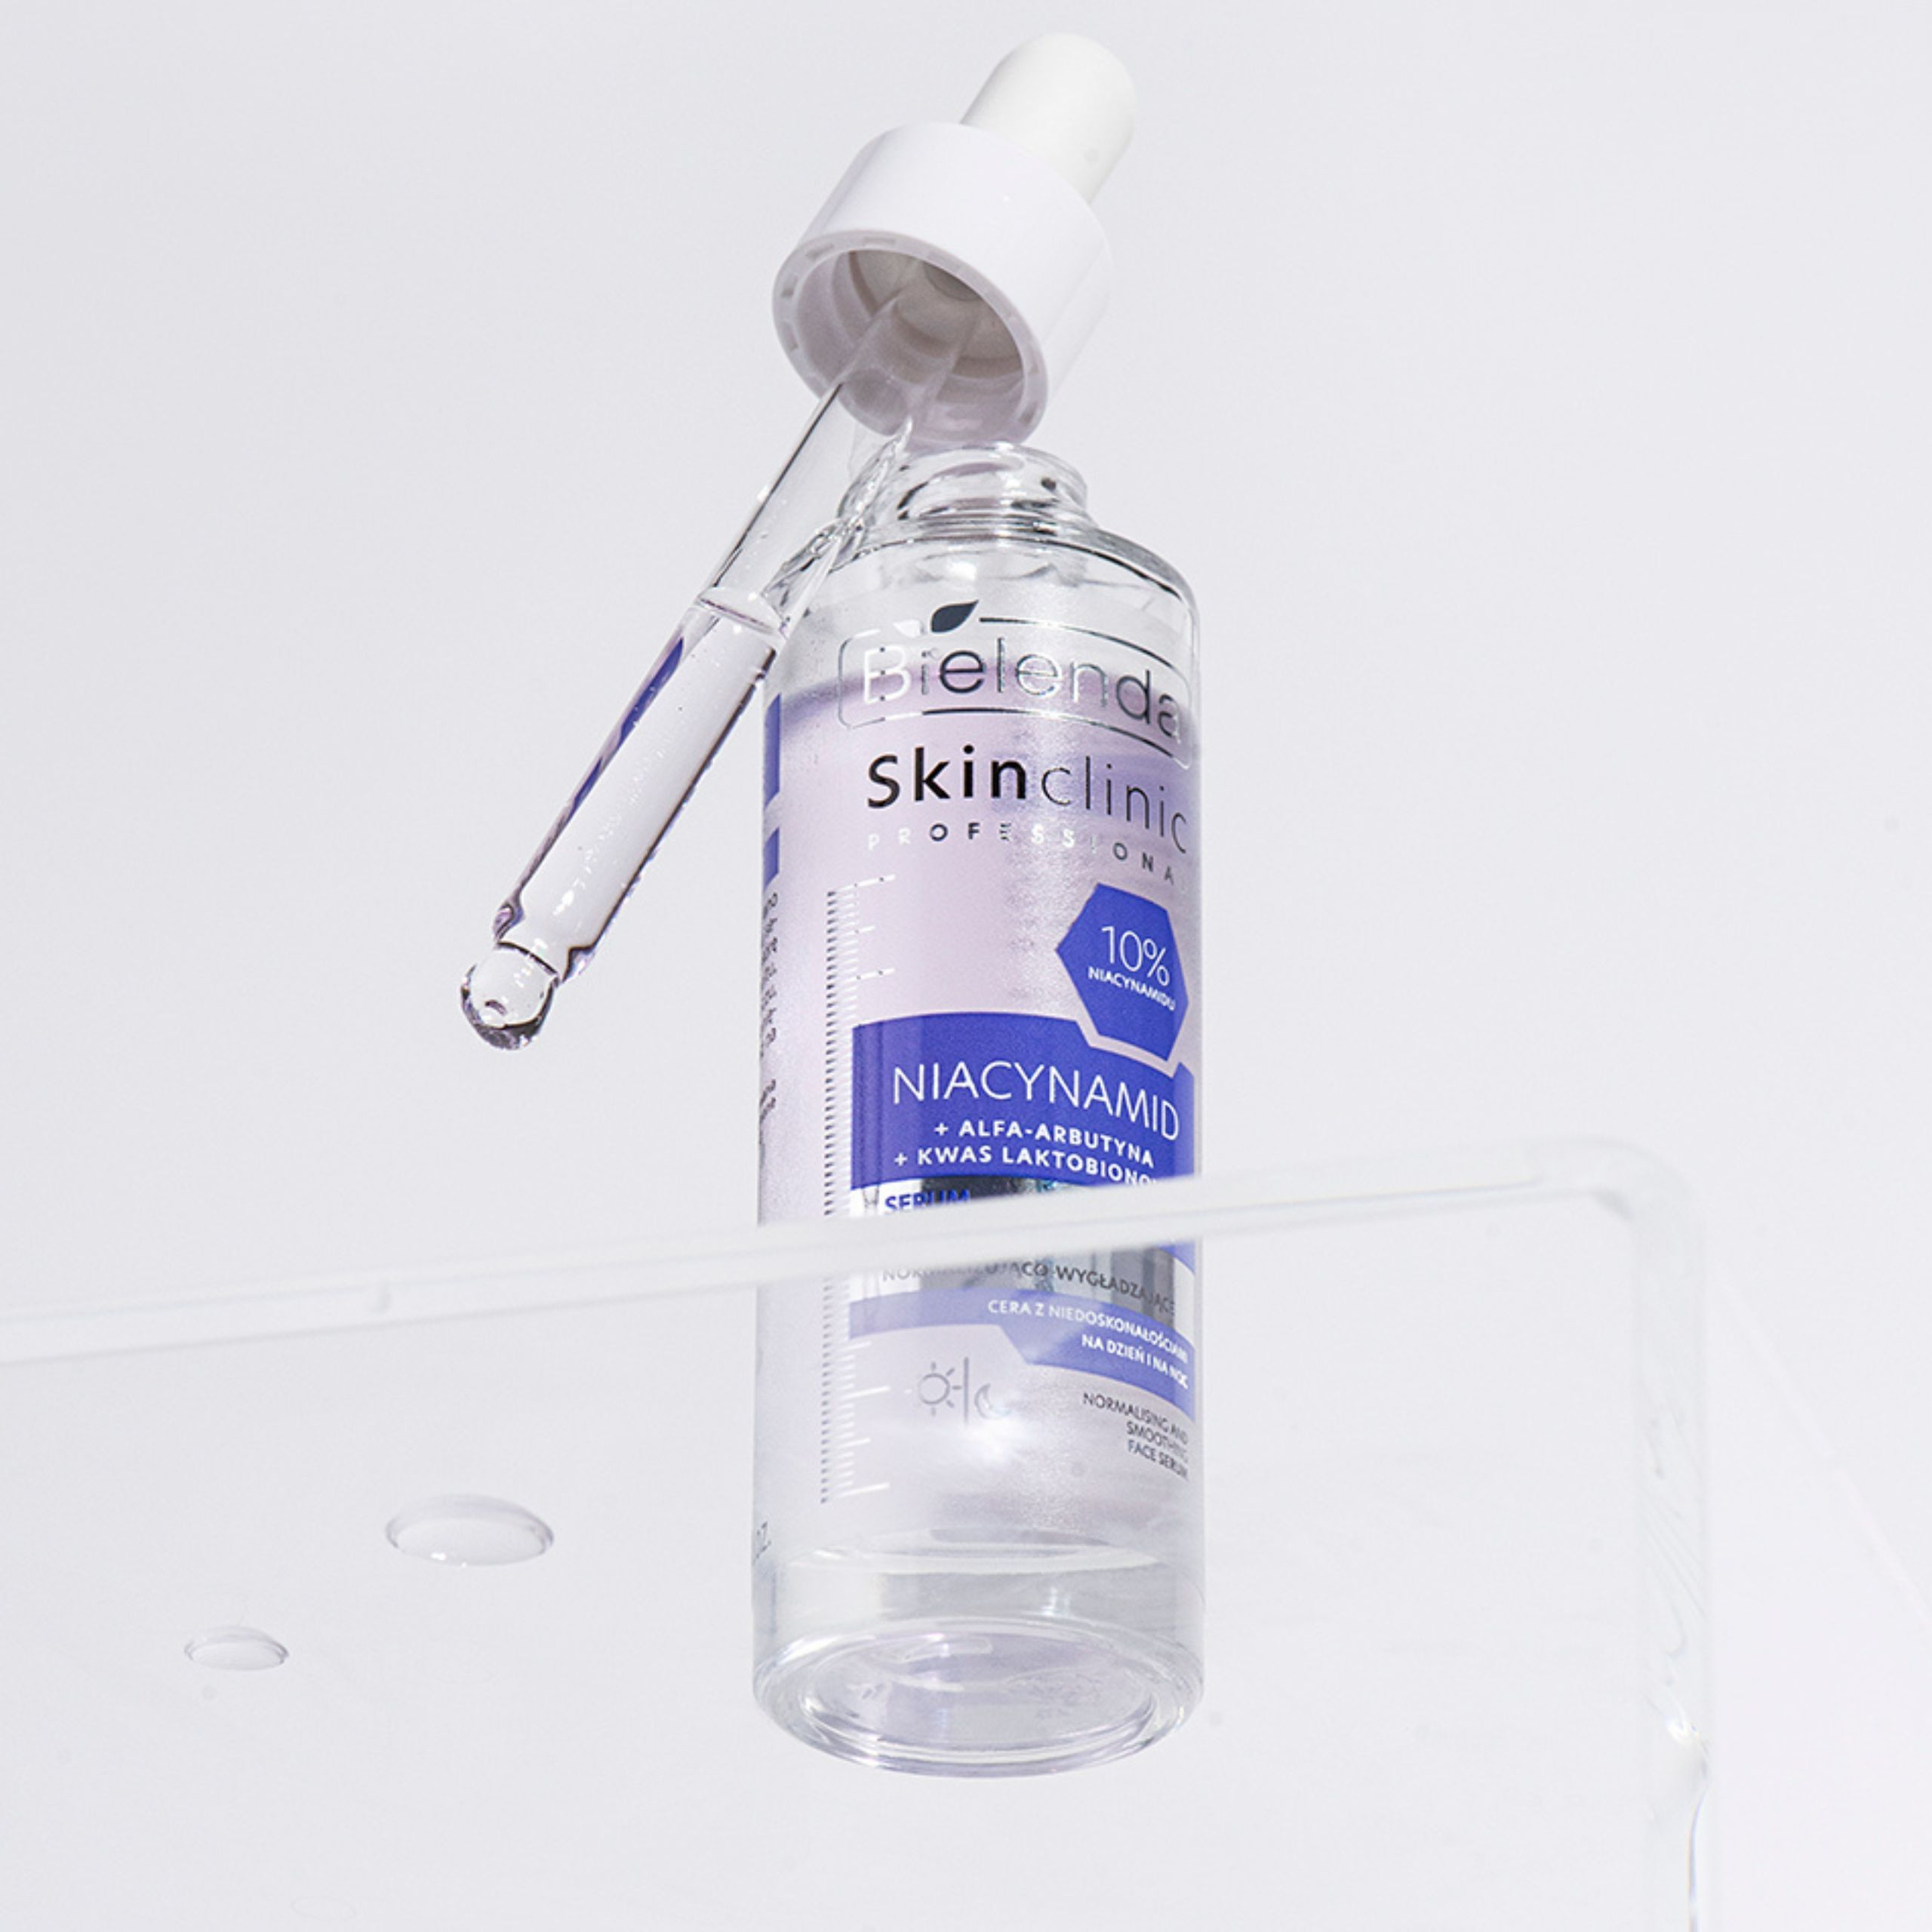 Serum dưỡng Bielenda Skin clinic professional sáng da & cấp ẩm